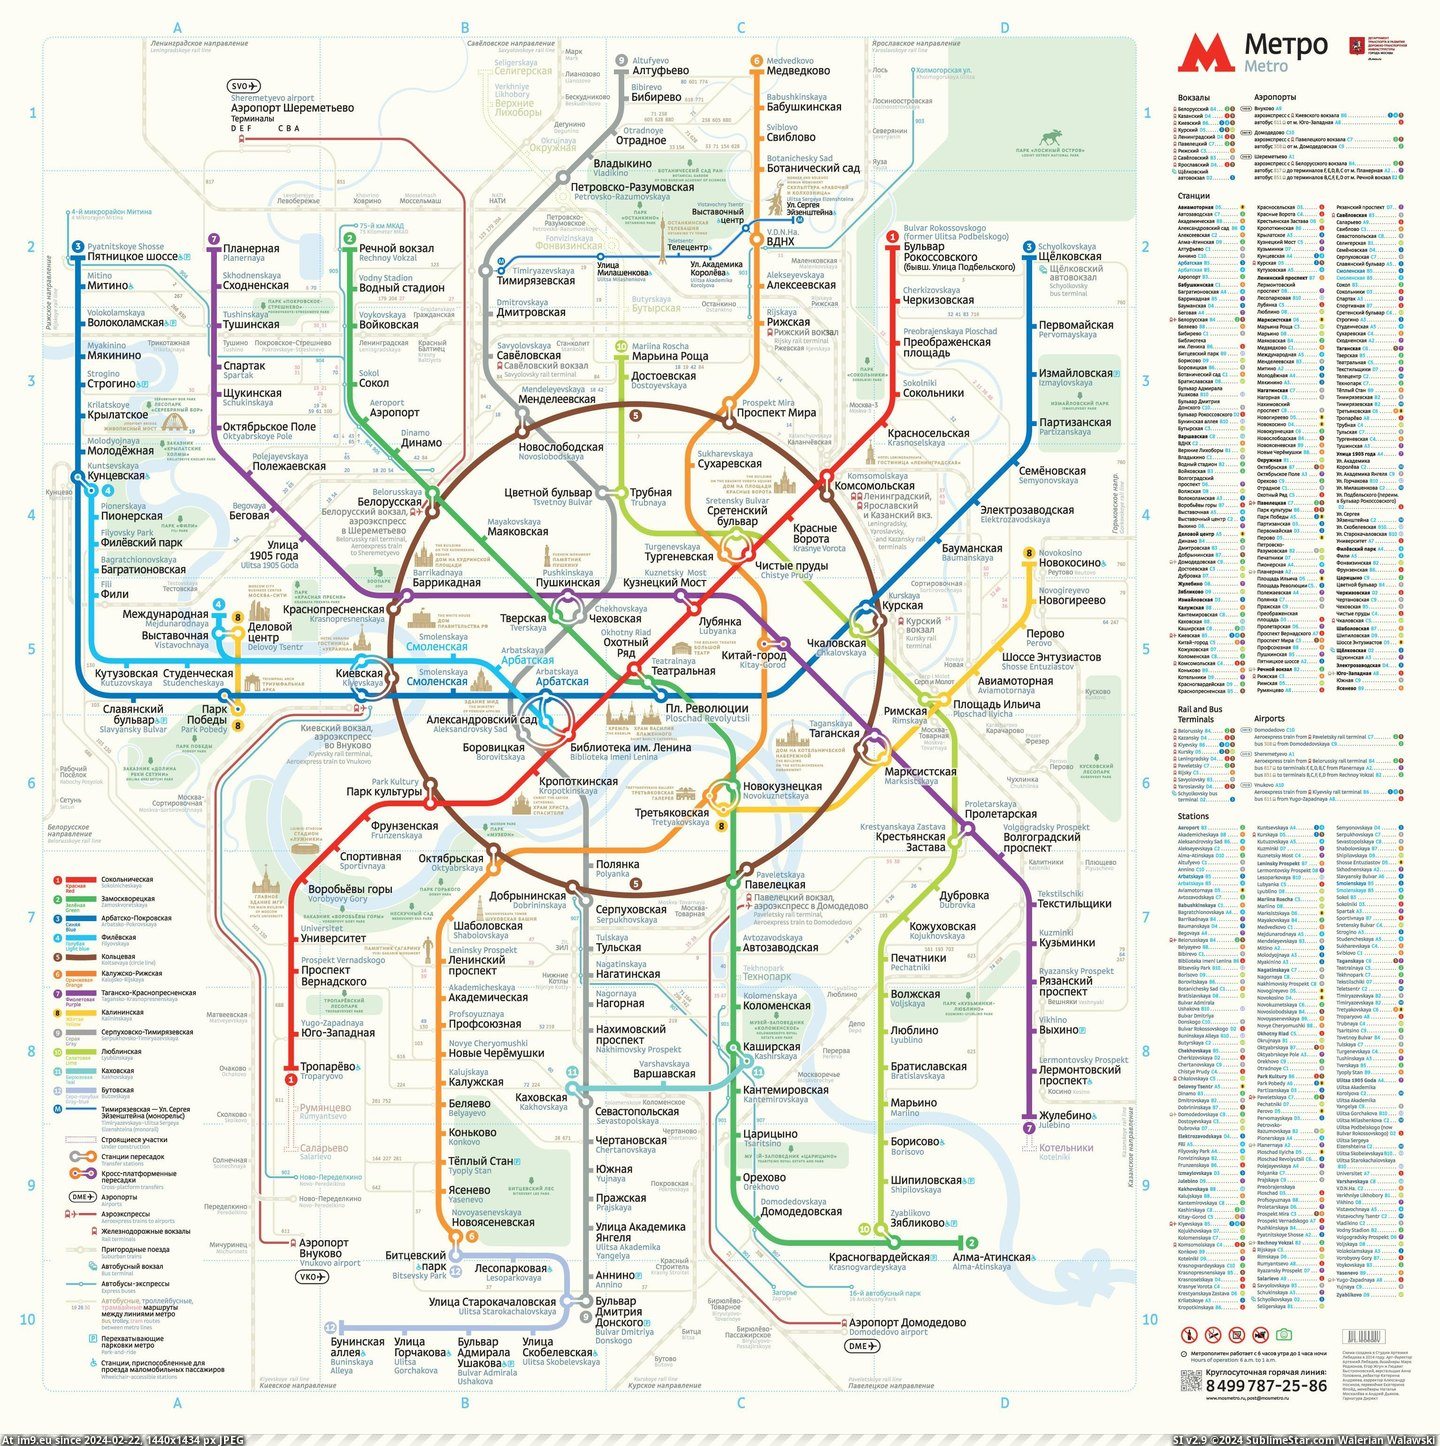 #Map #Metro #Vestibules #Moscow [Mapporn] New Moscow metro map for vestibules [3068x3068] Pic. (Bild von album My r/MAPS favs))